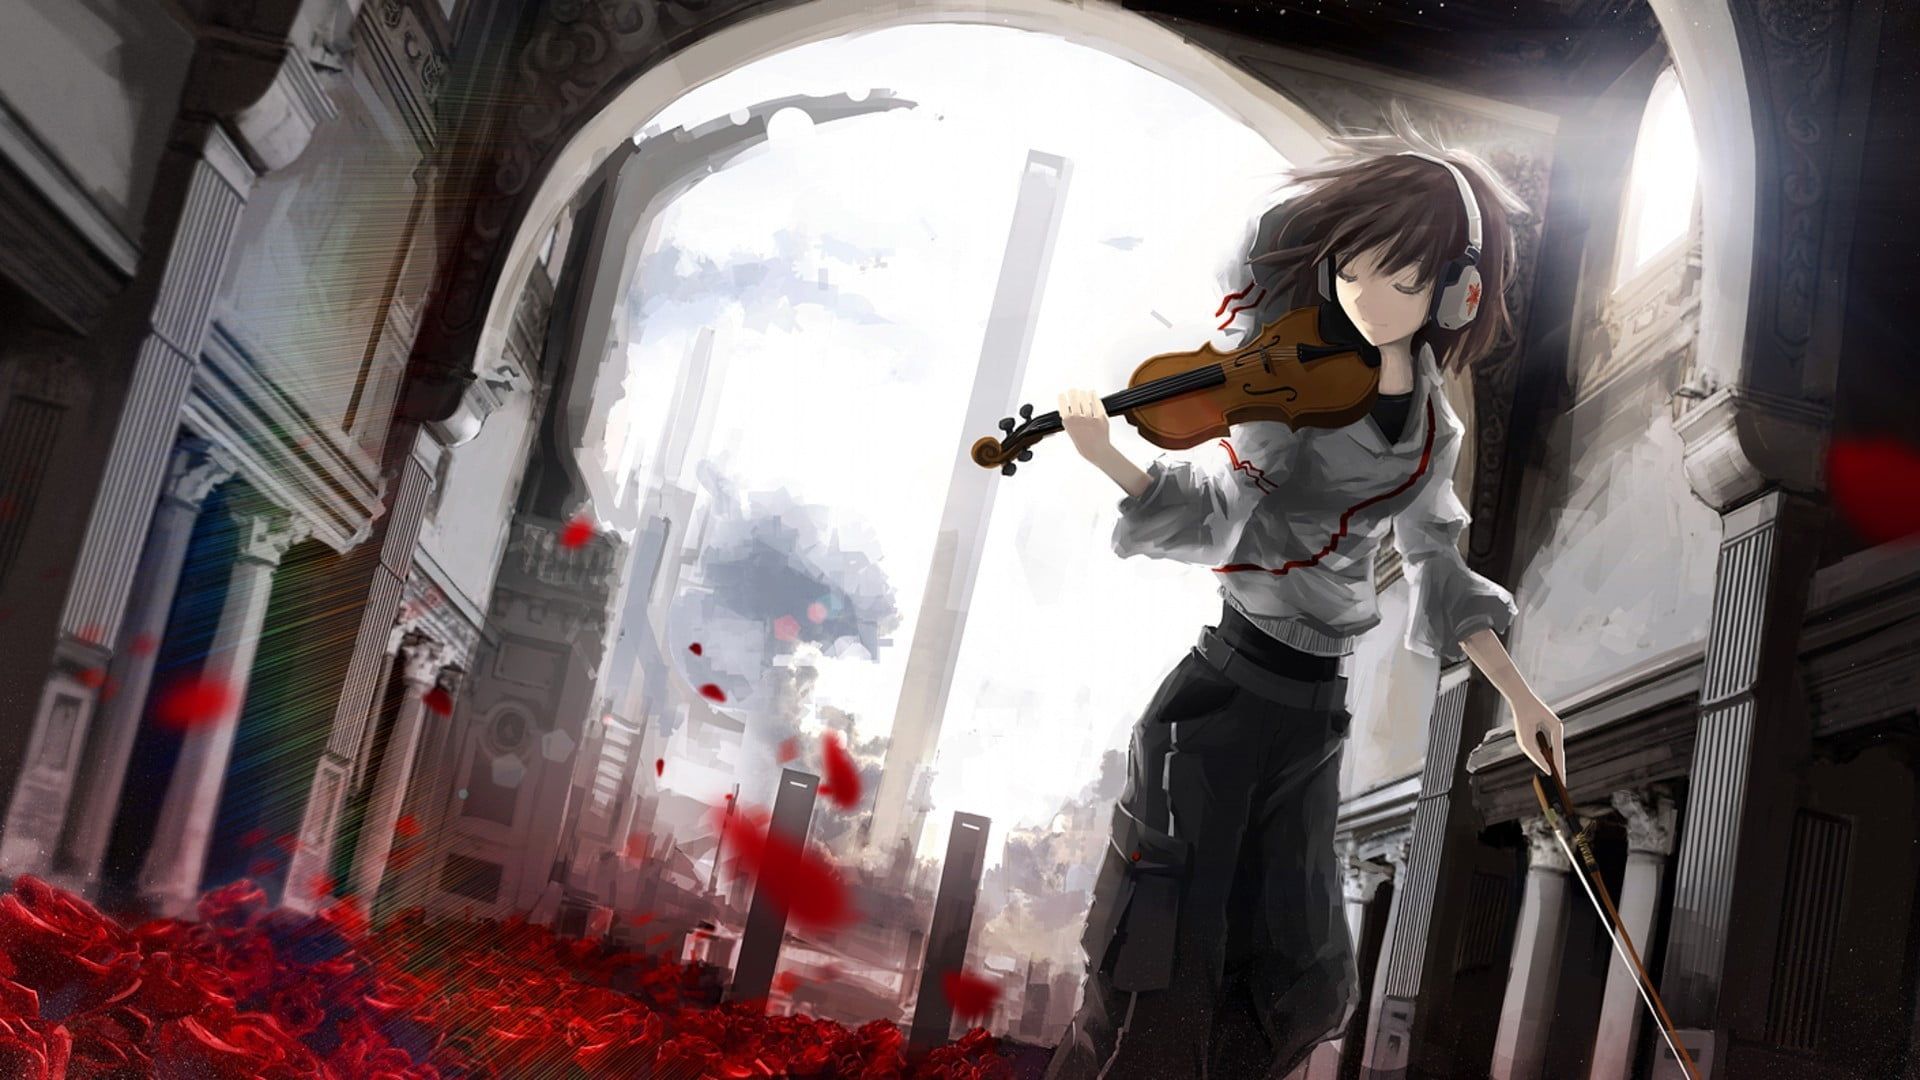 Anime Violin Wallpaper Free Anime Violin Background